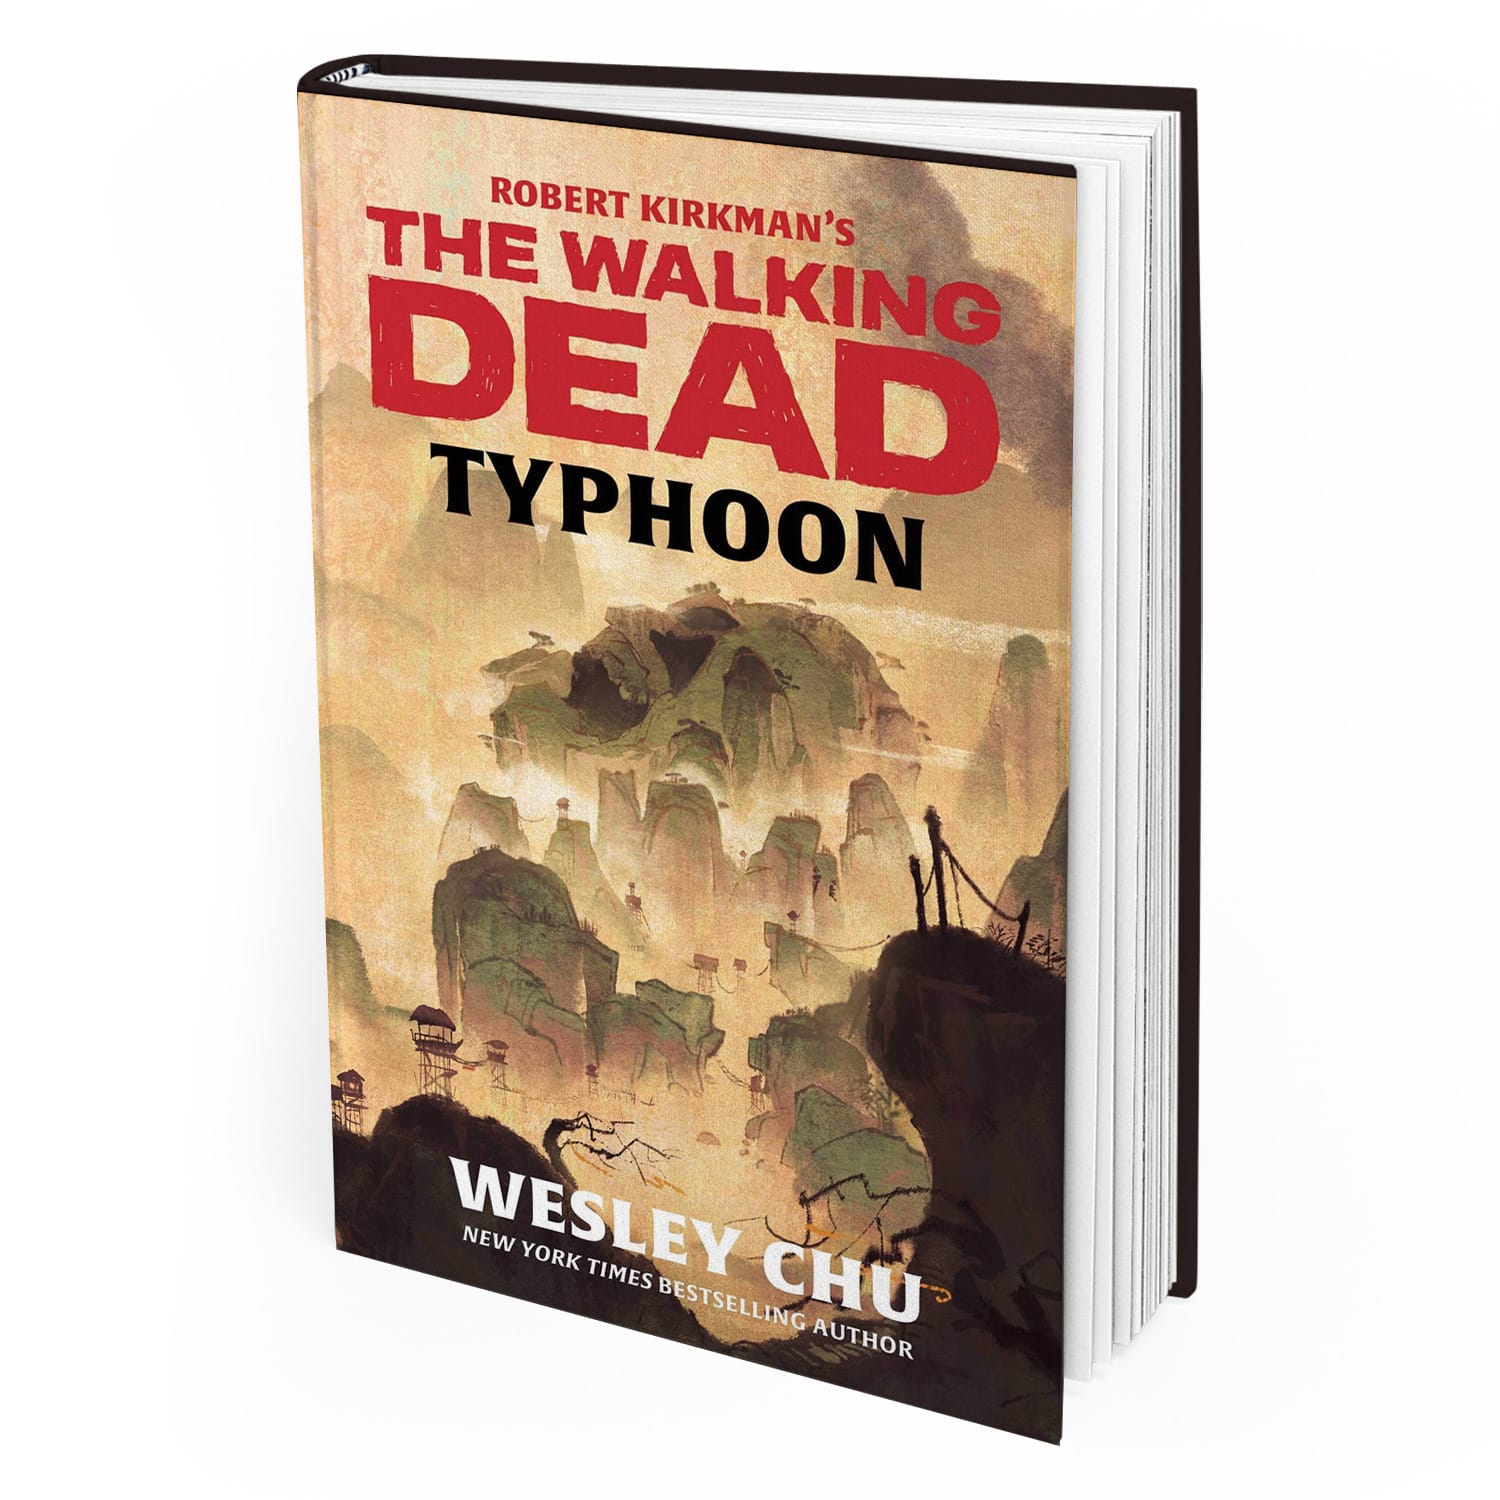 Robert Kirkman’s The Walking Dead: Typhoon